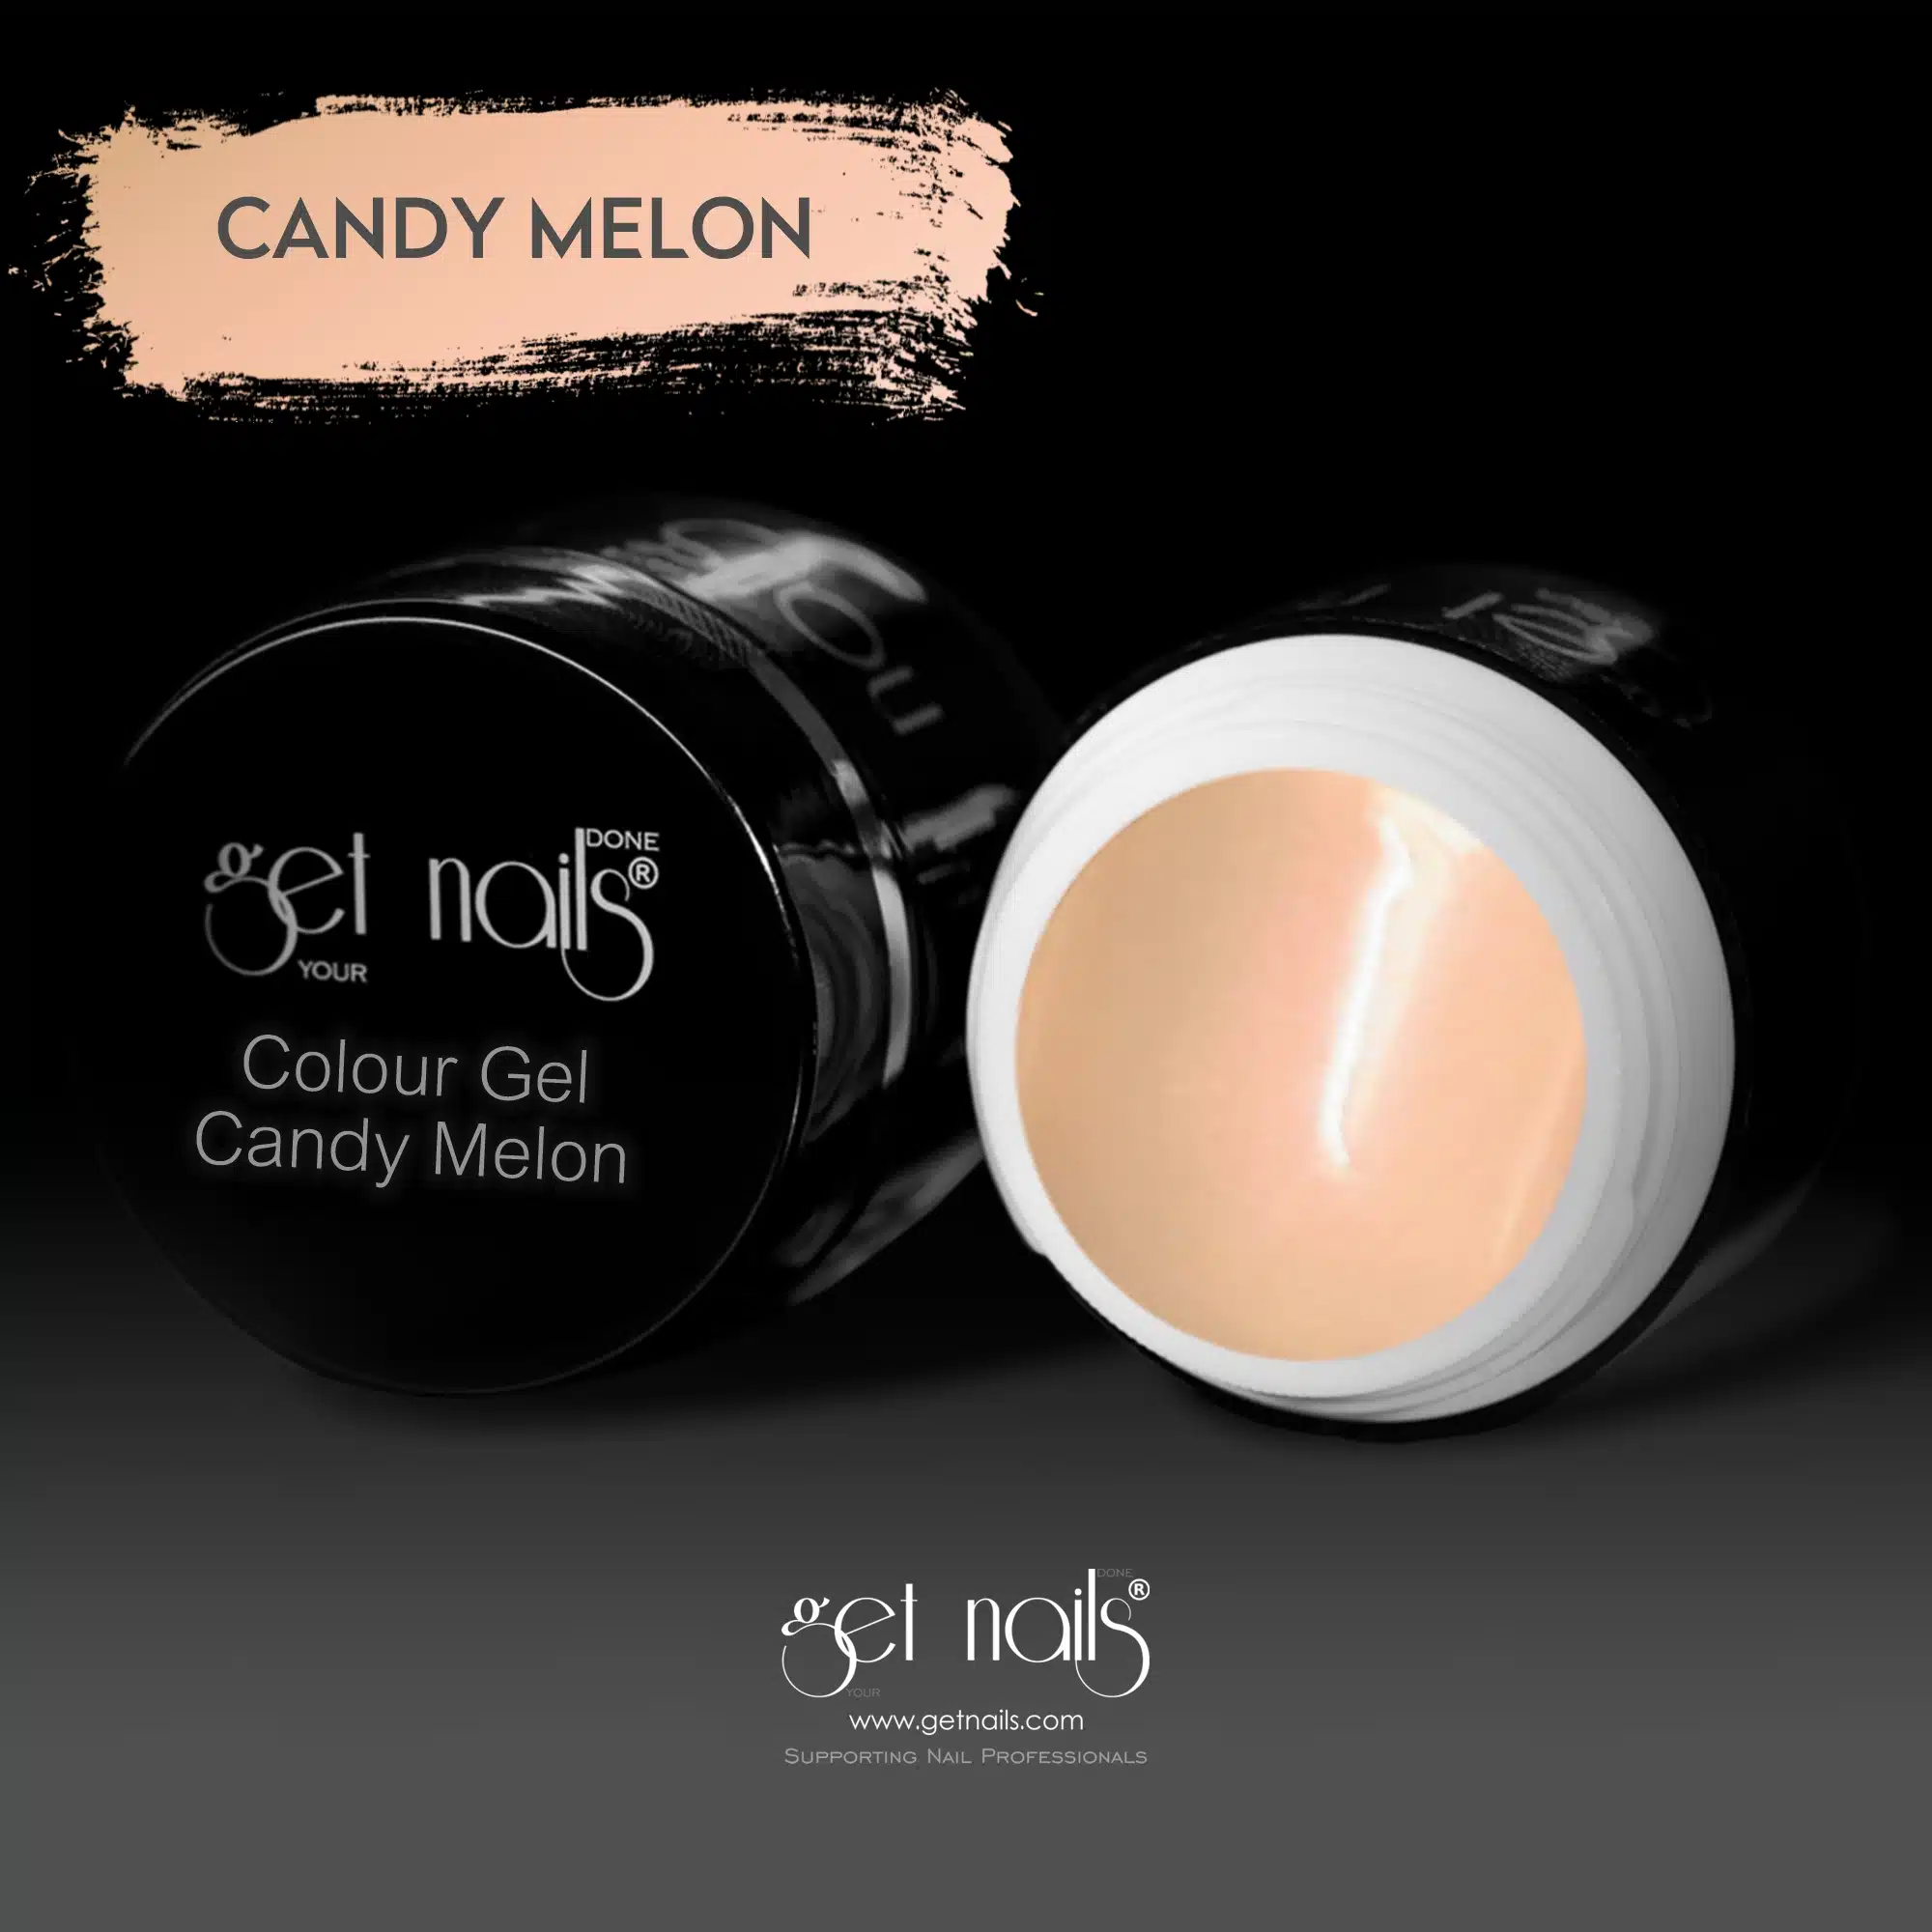 Get Nails Austria - Цветной гель Candy Melon 5g